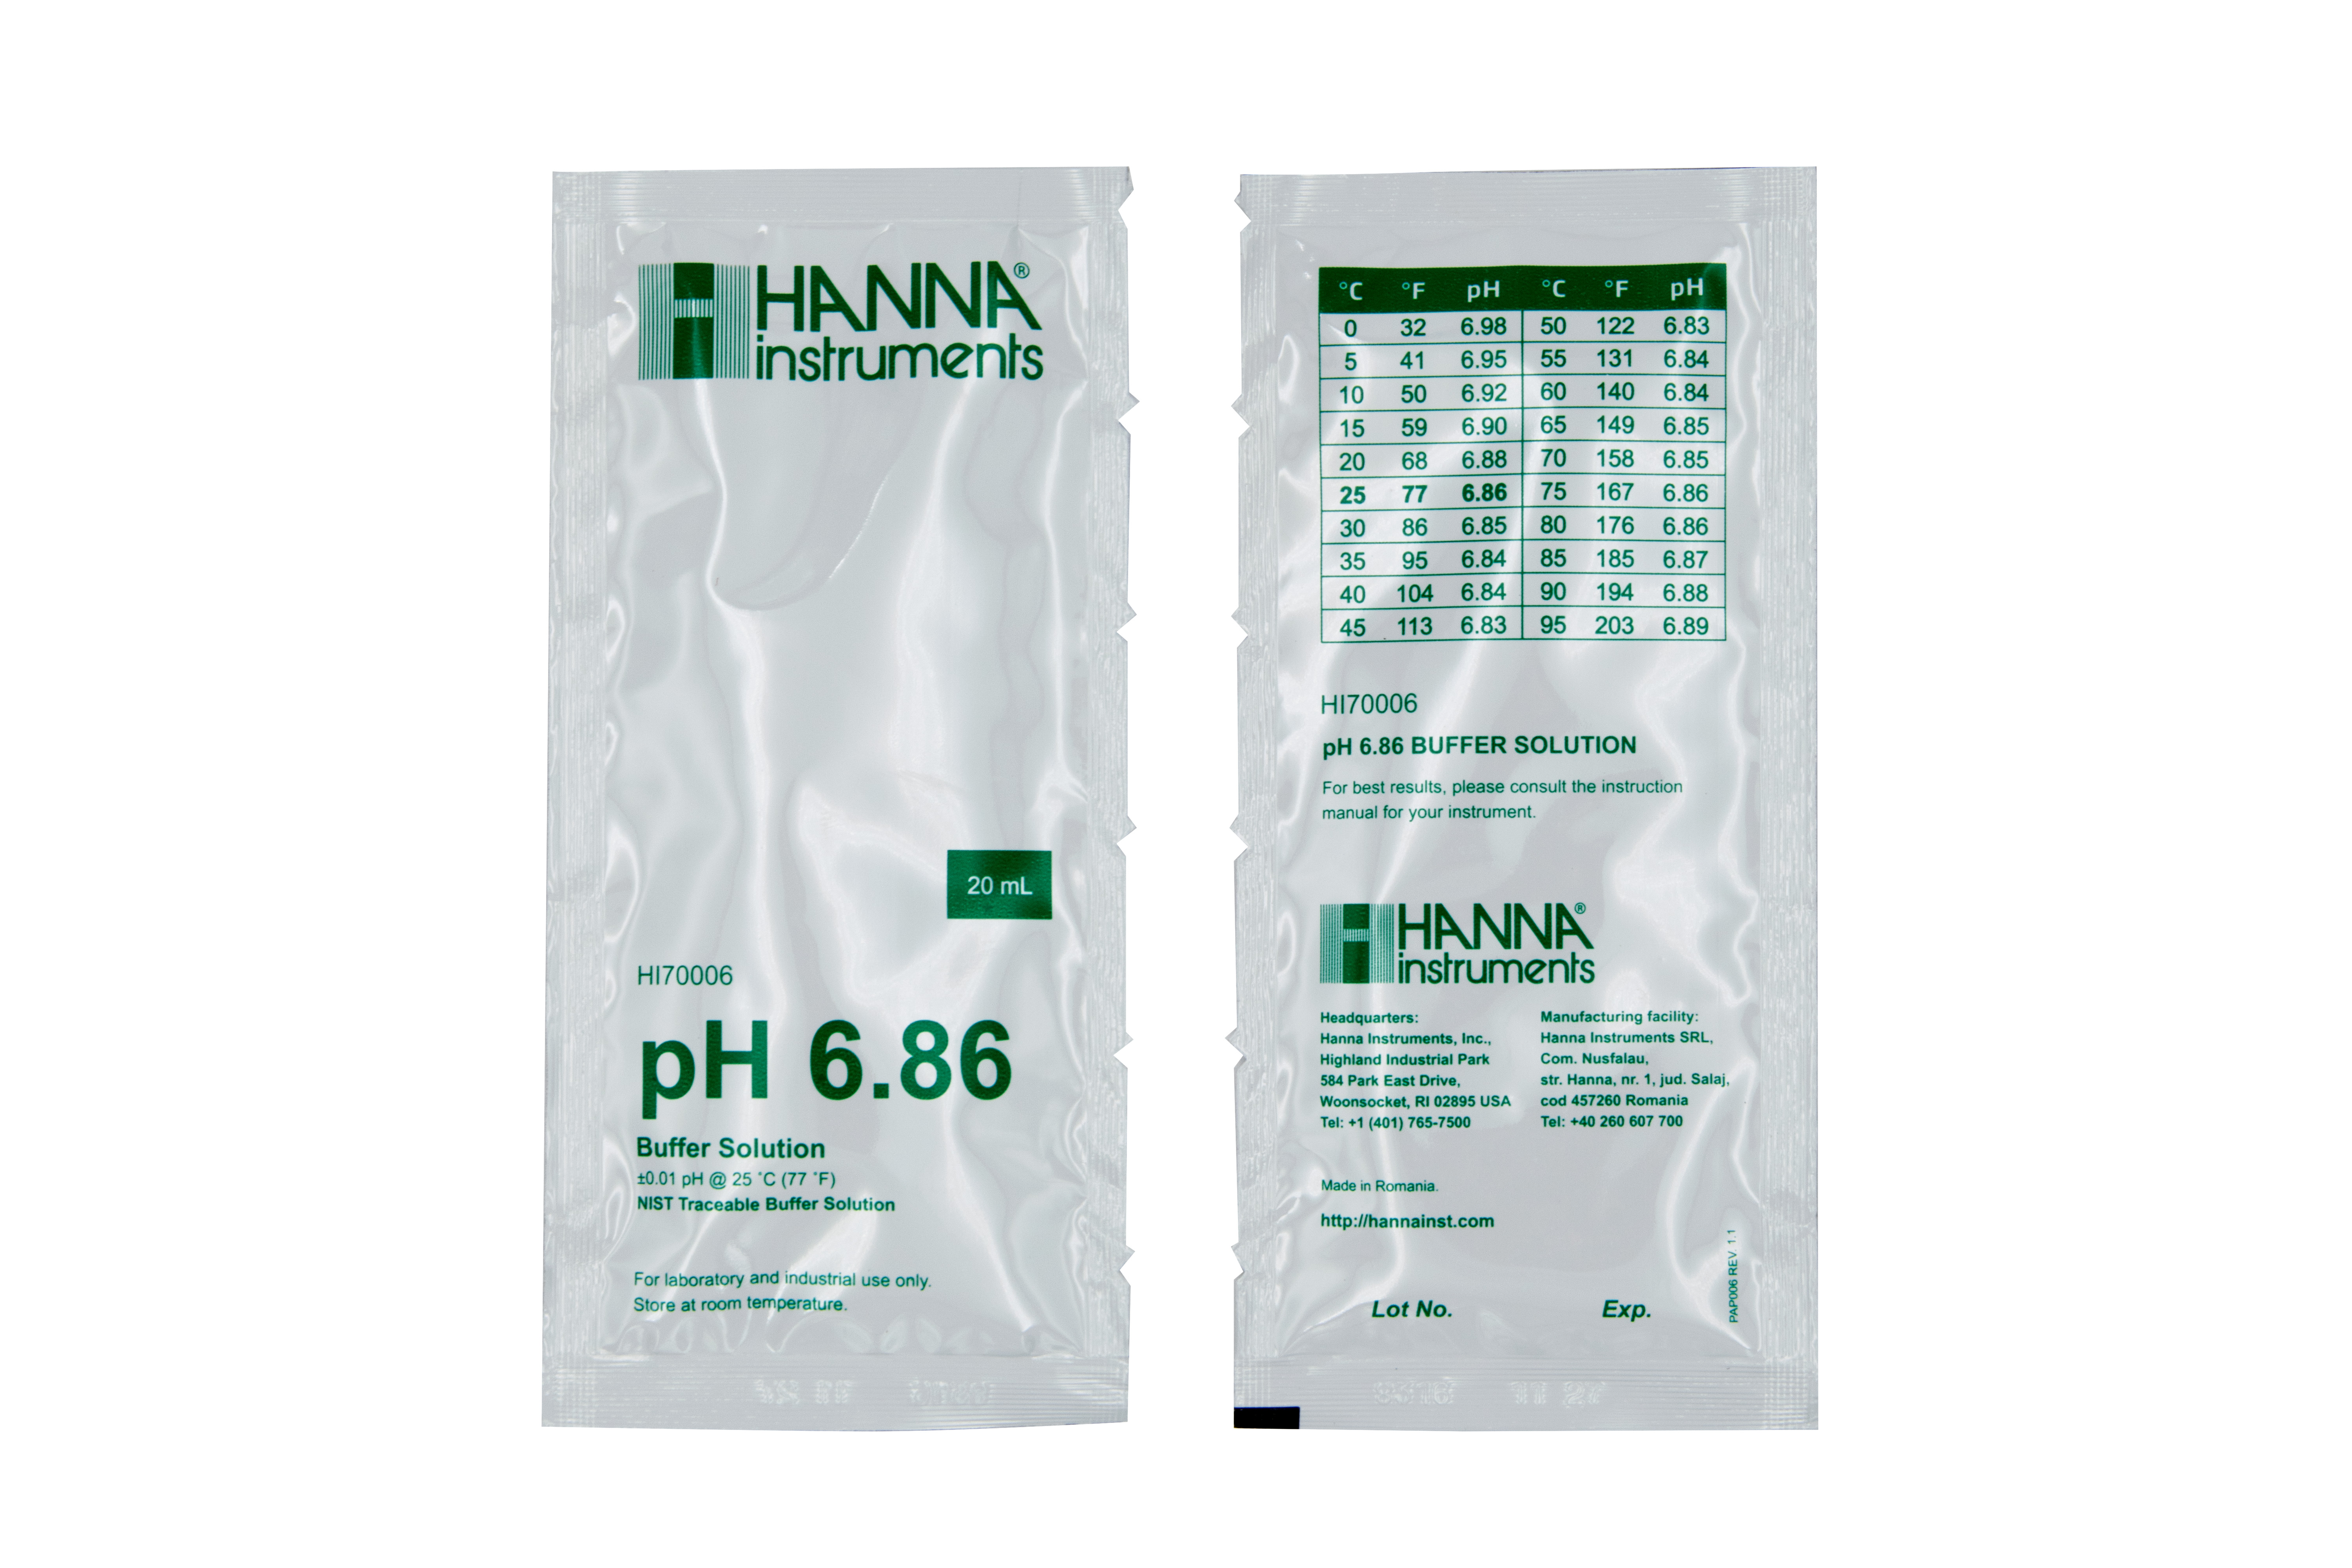 HANNA Pufferlösung pH 6.86, 25 x 20mL Beutel (HI70006P)